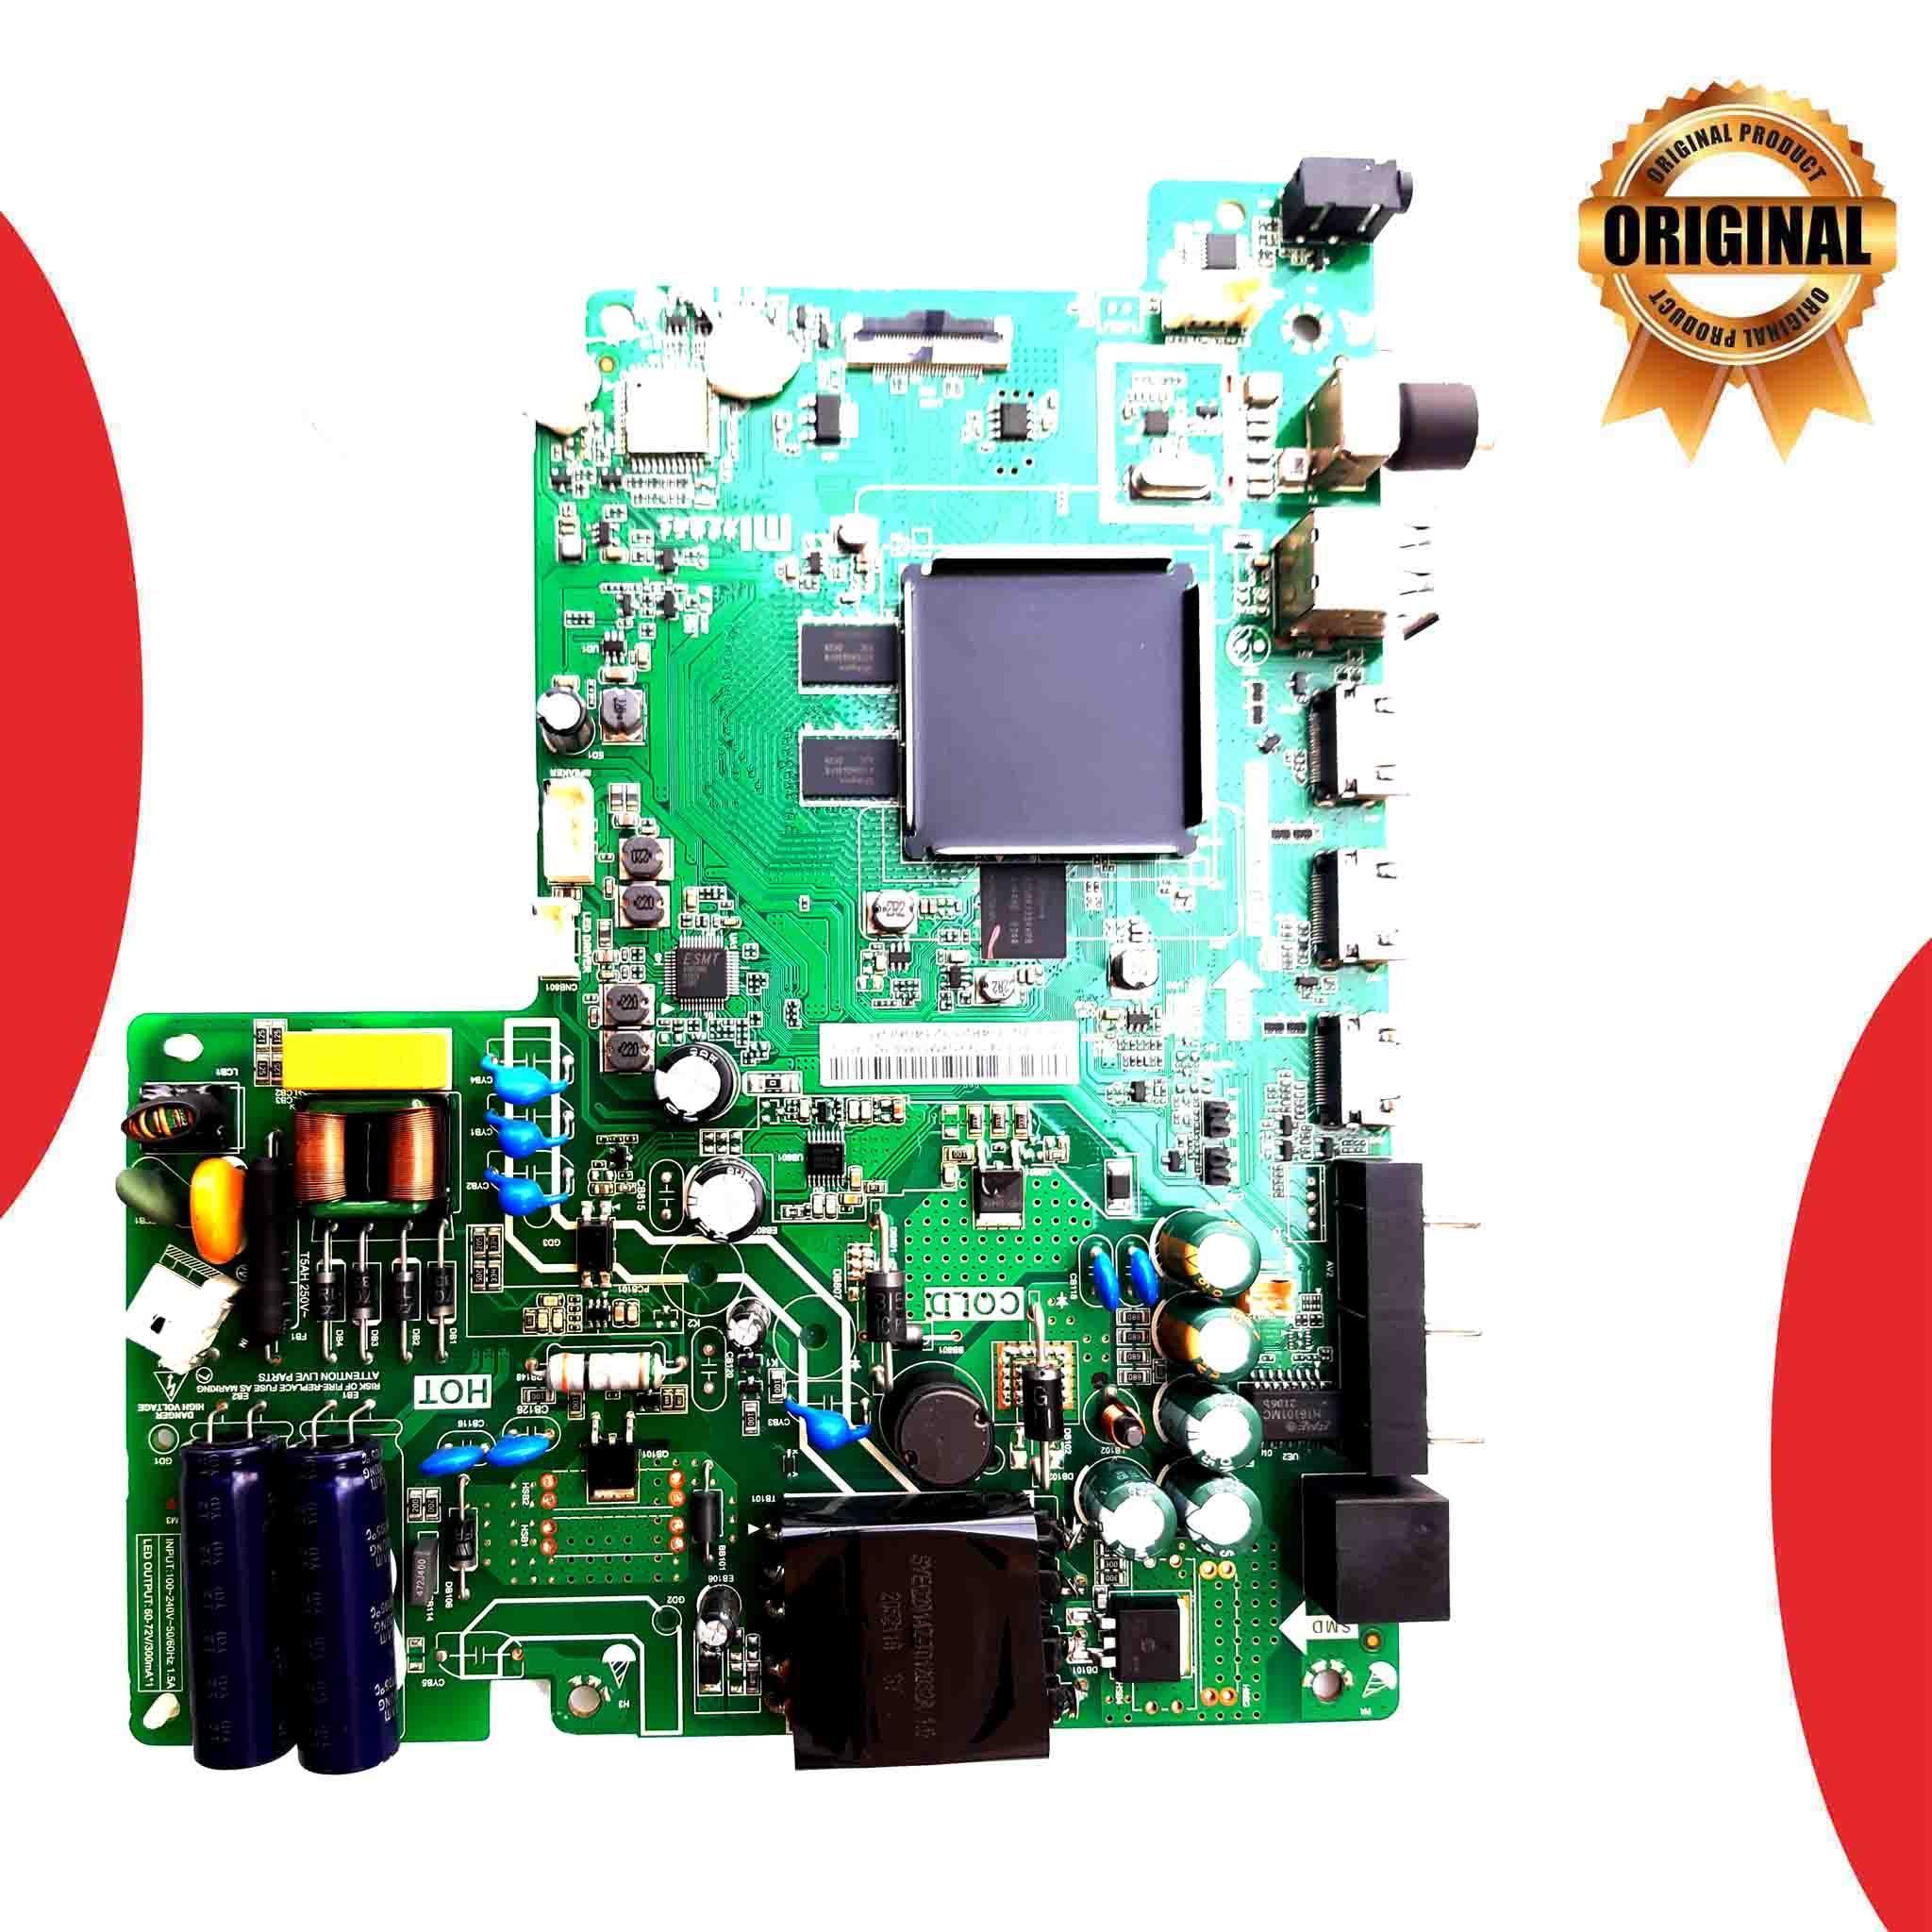 Mi 32 inch LED TV Motherboard for Model L32M6 - Great Bharat Electronics